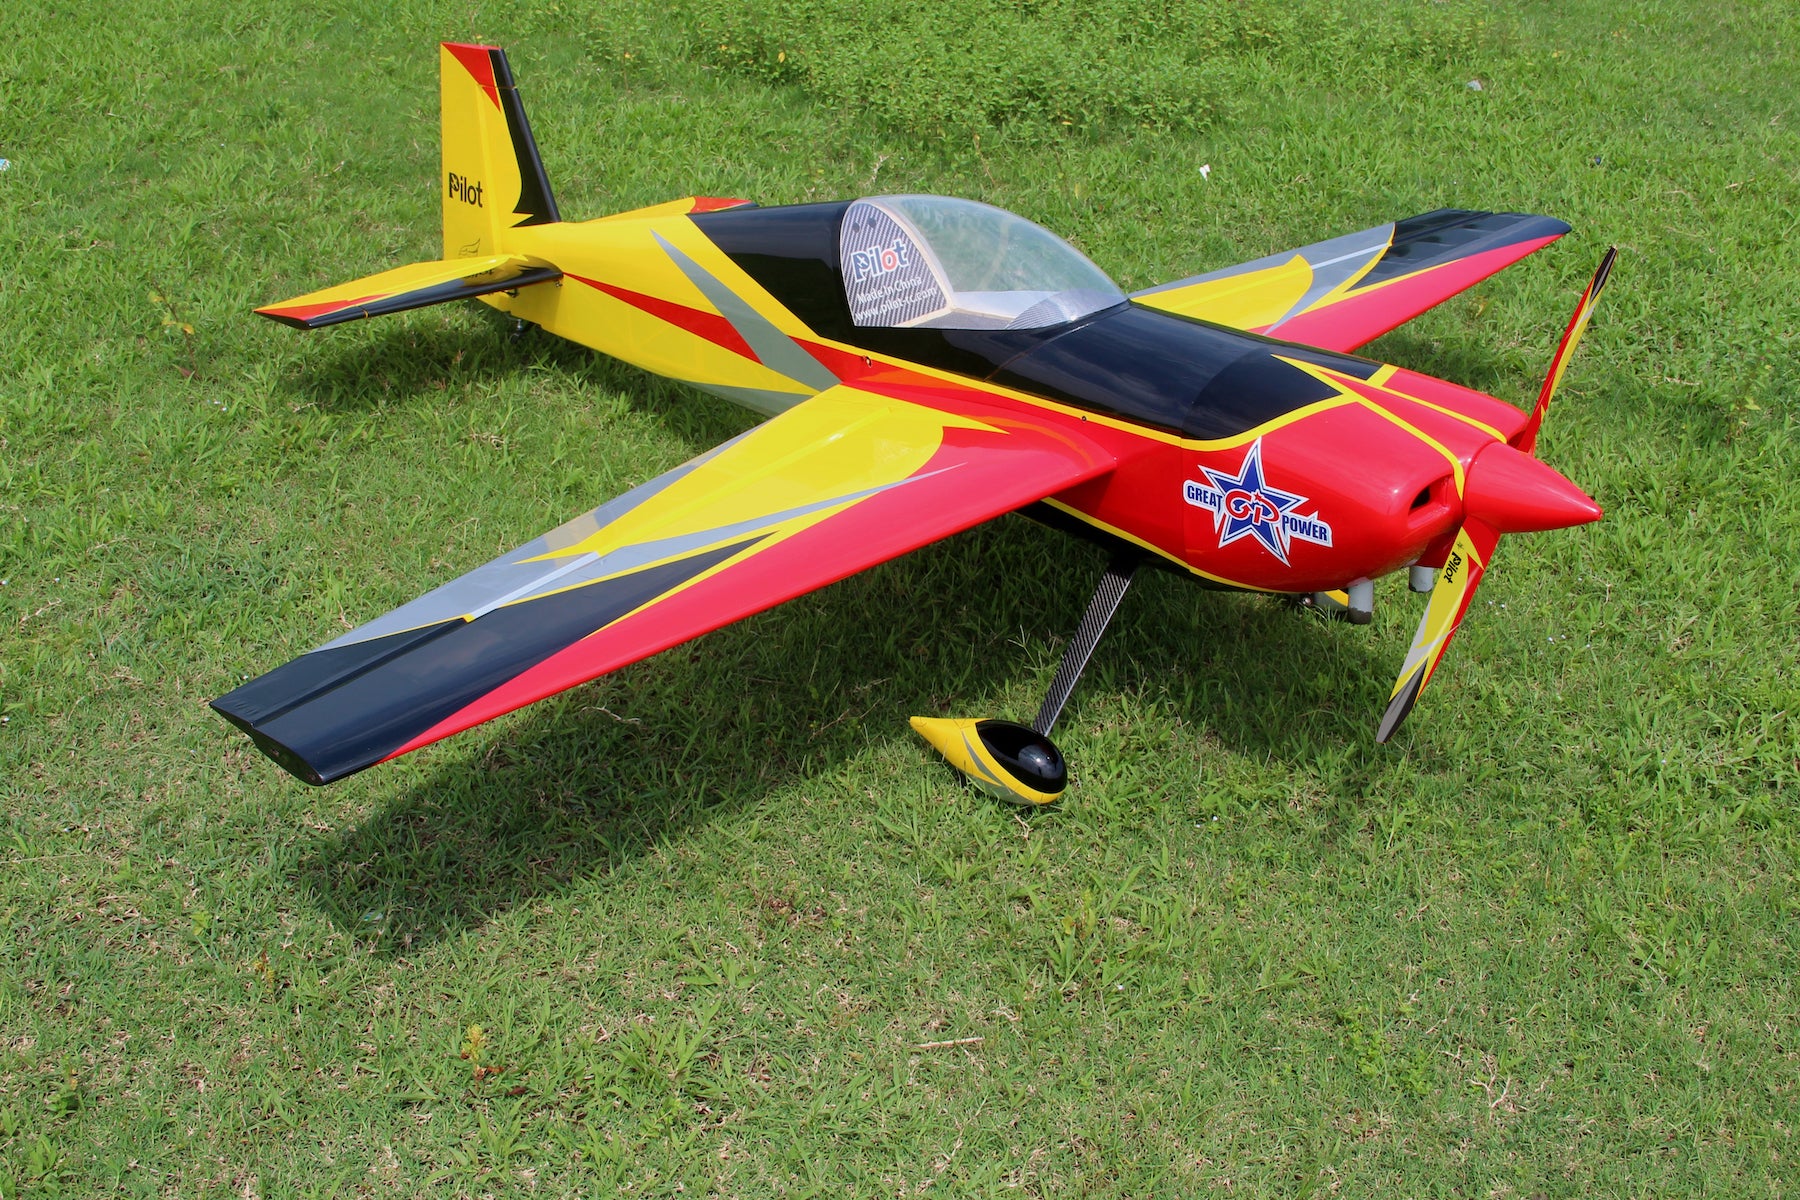 Pilot-RC Slick 103in (2.63m) (Red/Yellow/Black (01)) PIL025